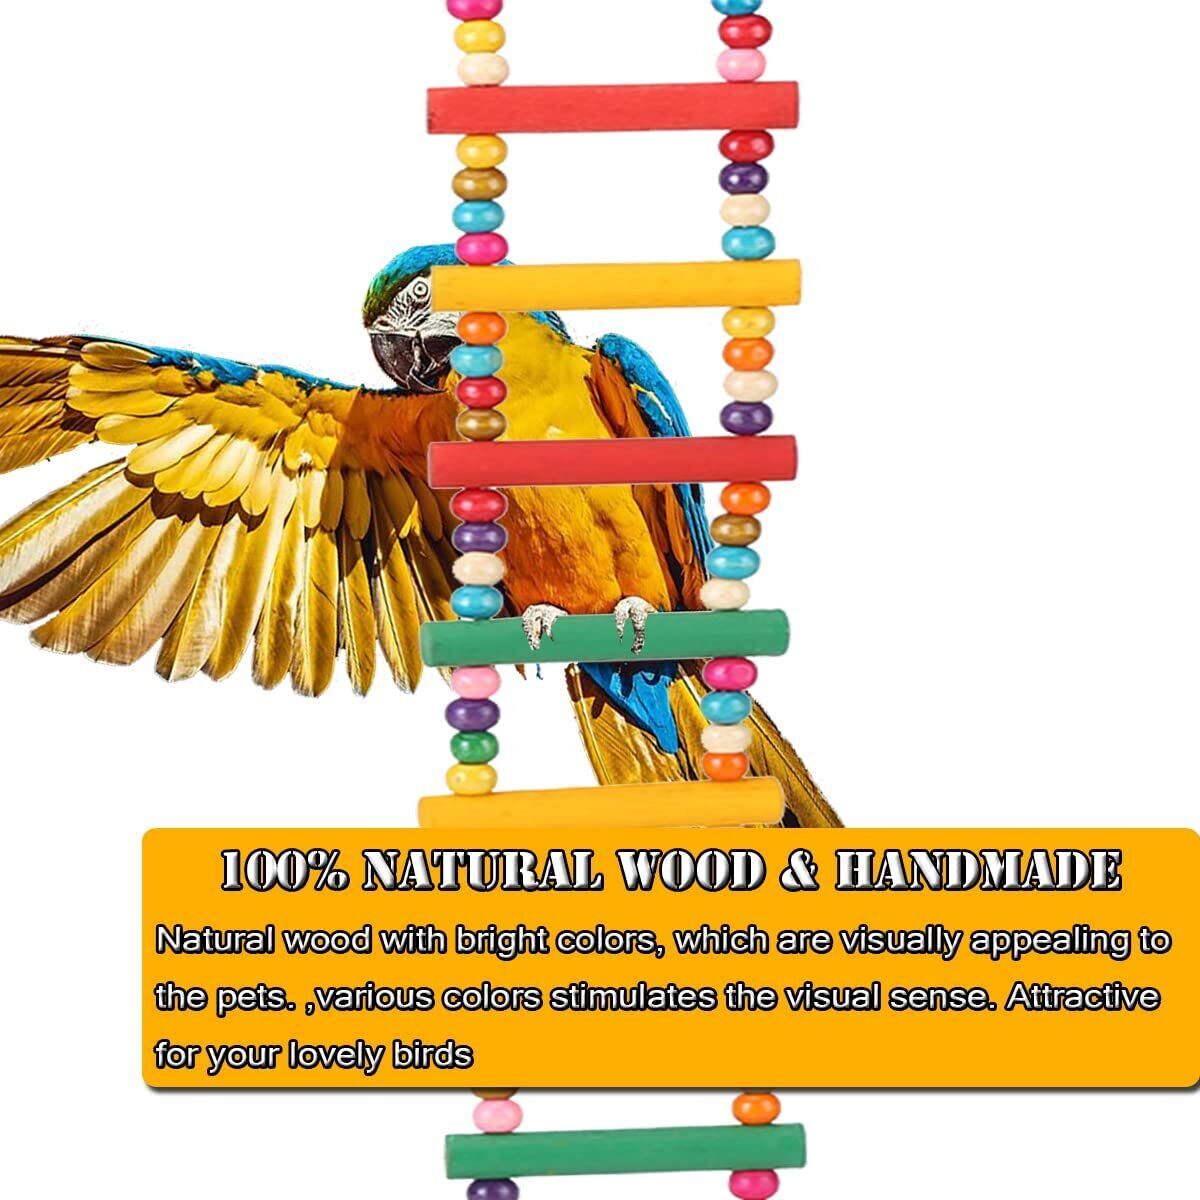 Natural Wood Pet Bird Parrot Ladders Climbing Toy Hanging Colorful Balls Decor